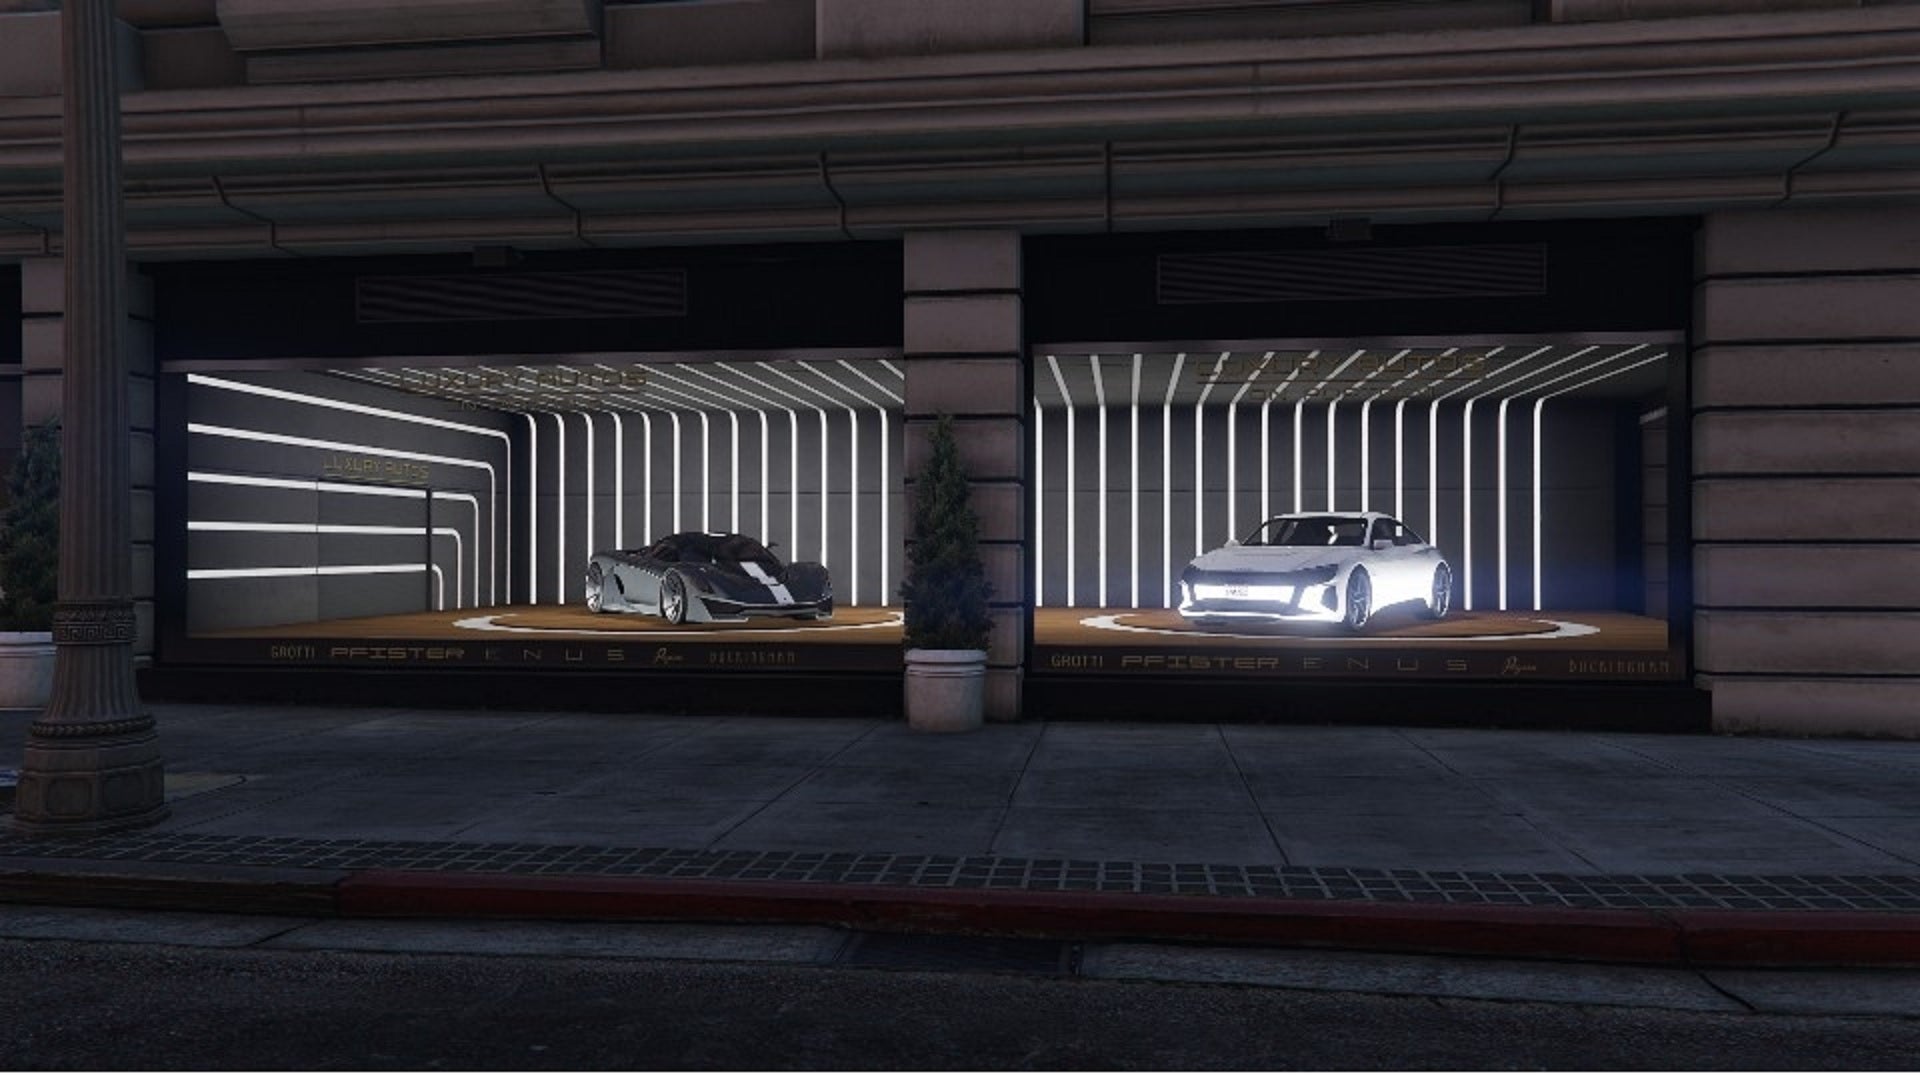 The new Luxury car shop in GTA Online